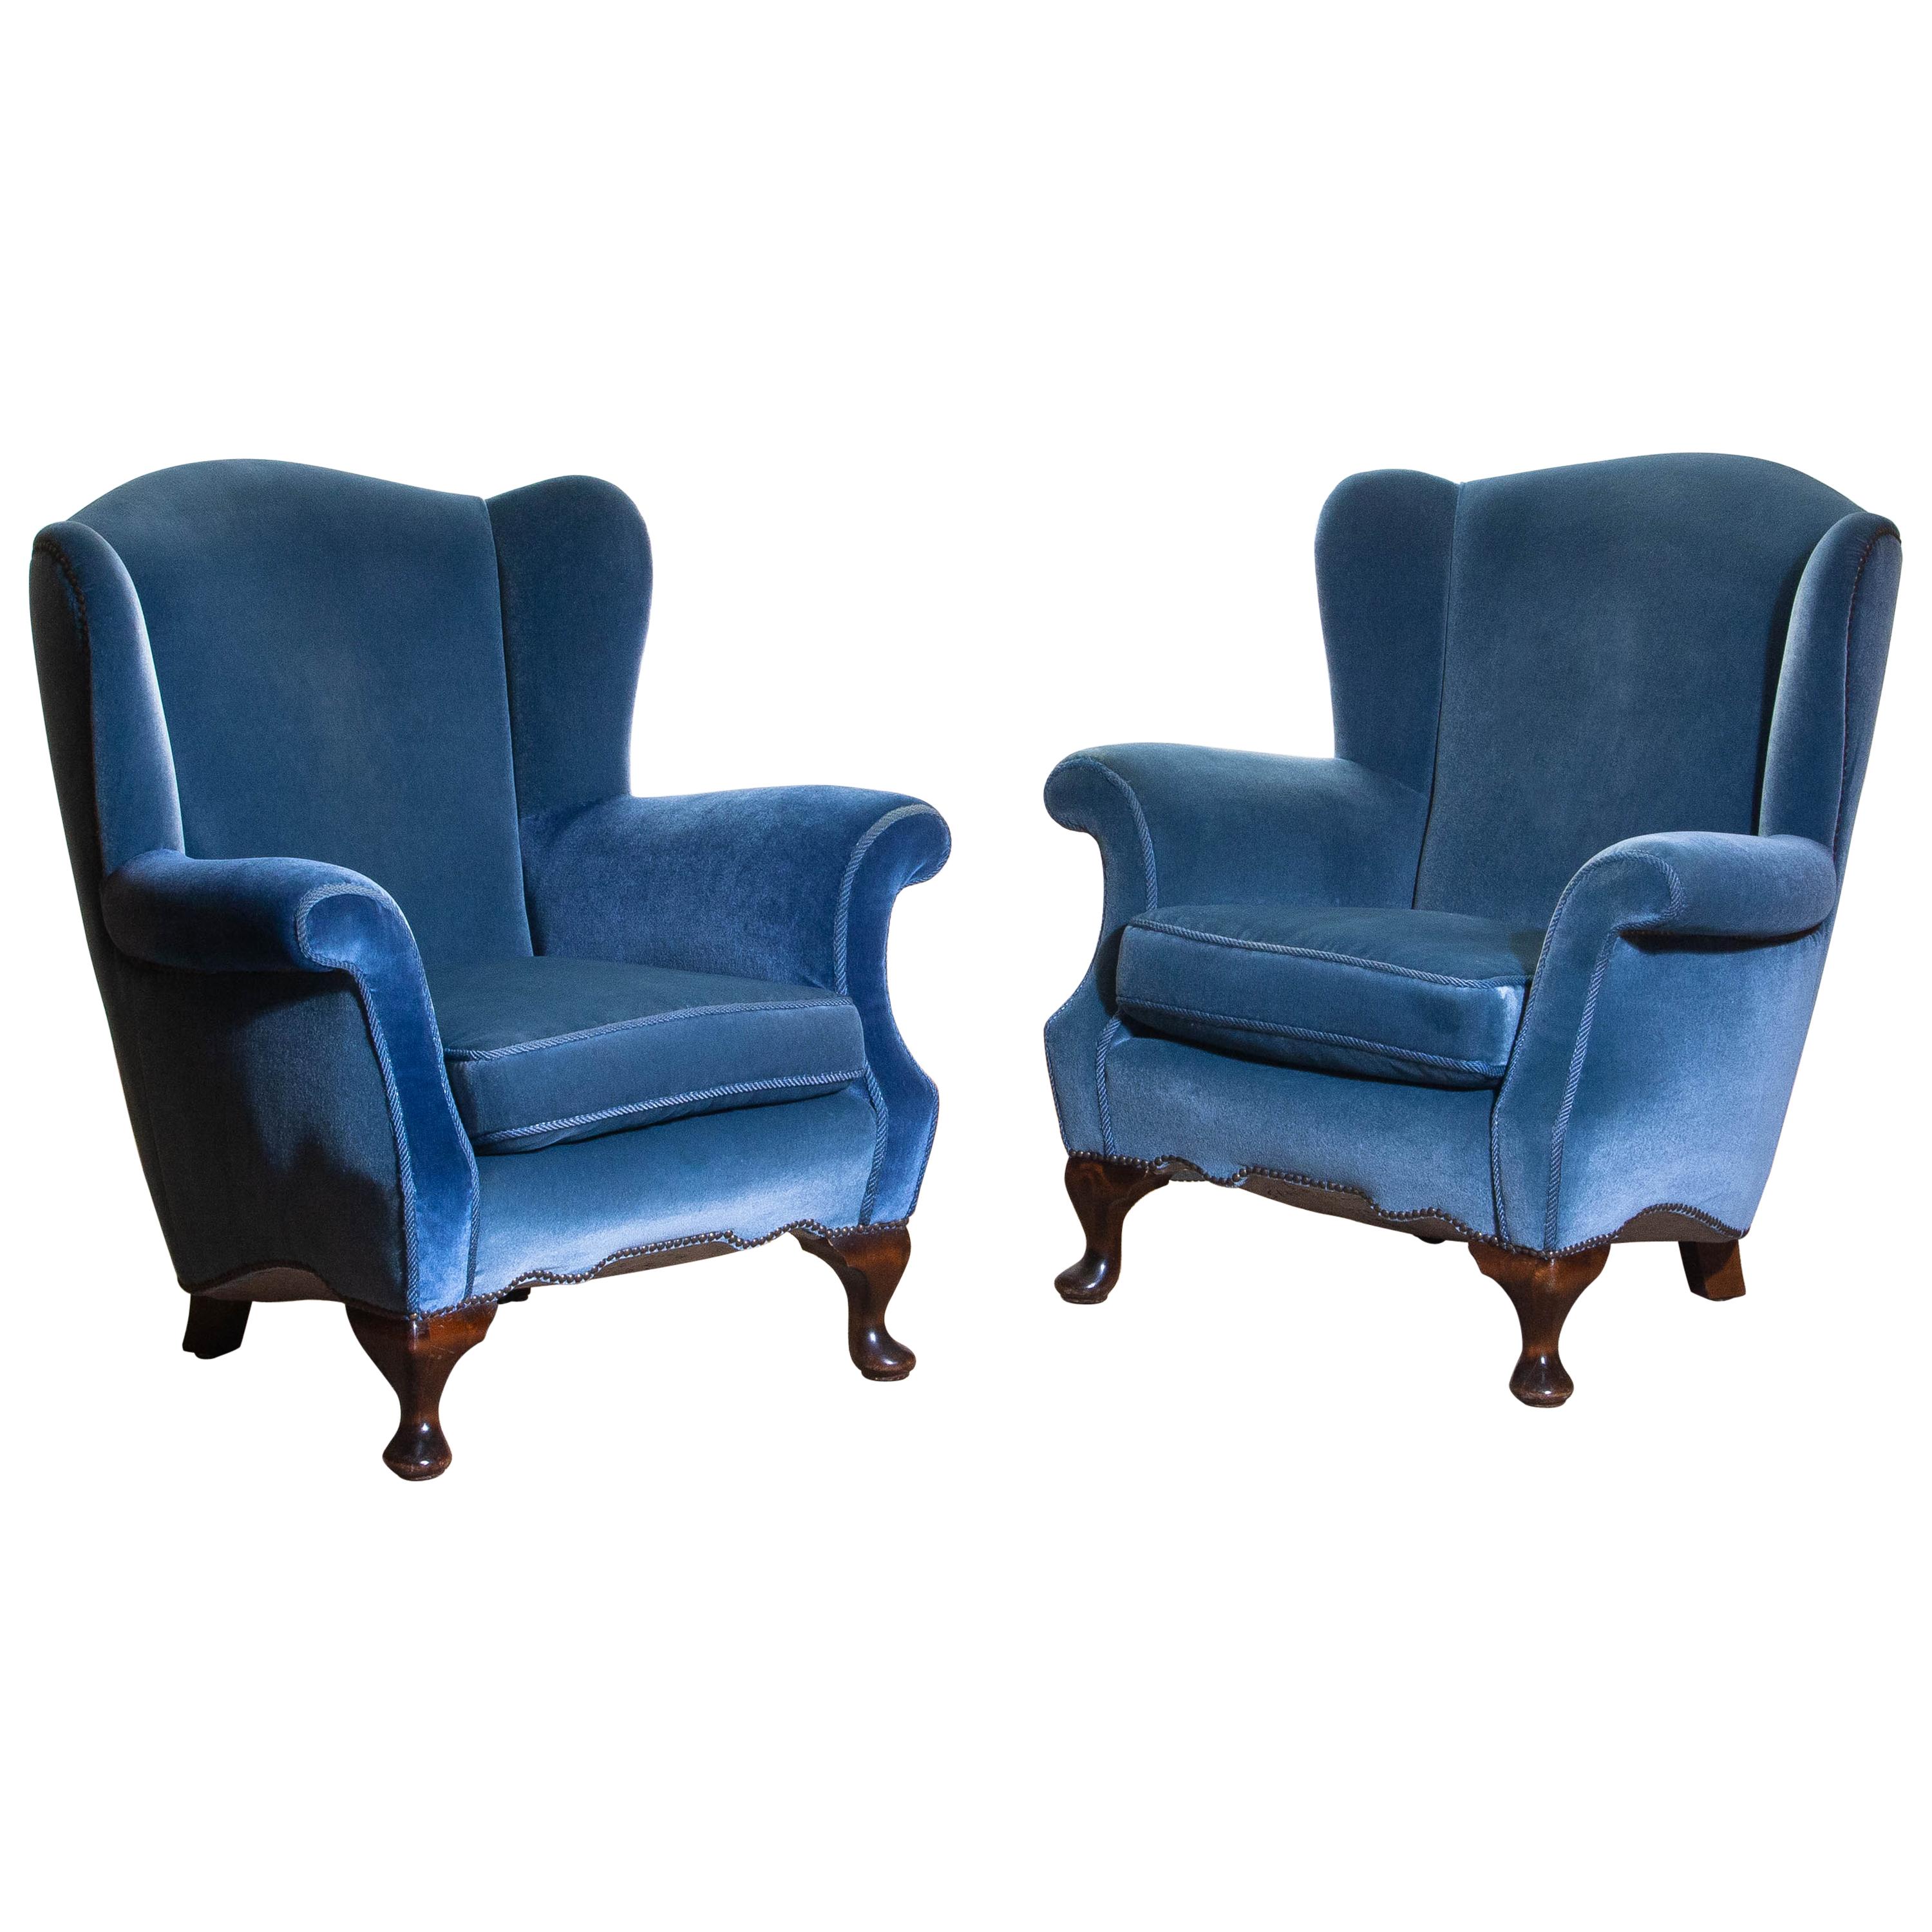 1920s, Pair of Romantic Swedish Blue Velvet Wingback Club / Lounge Chairs (Hollywood Regency)